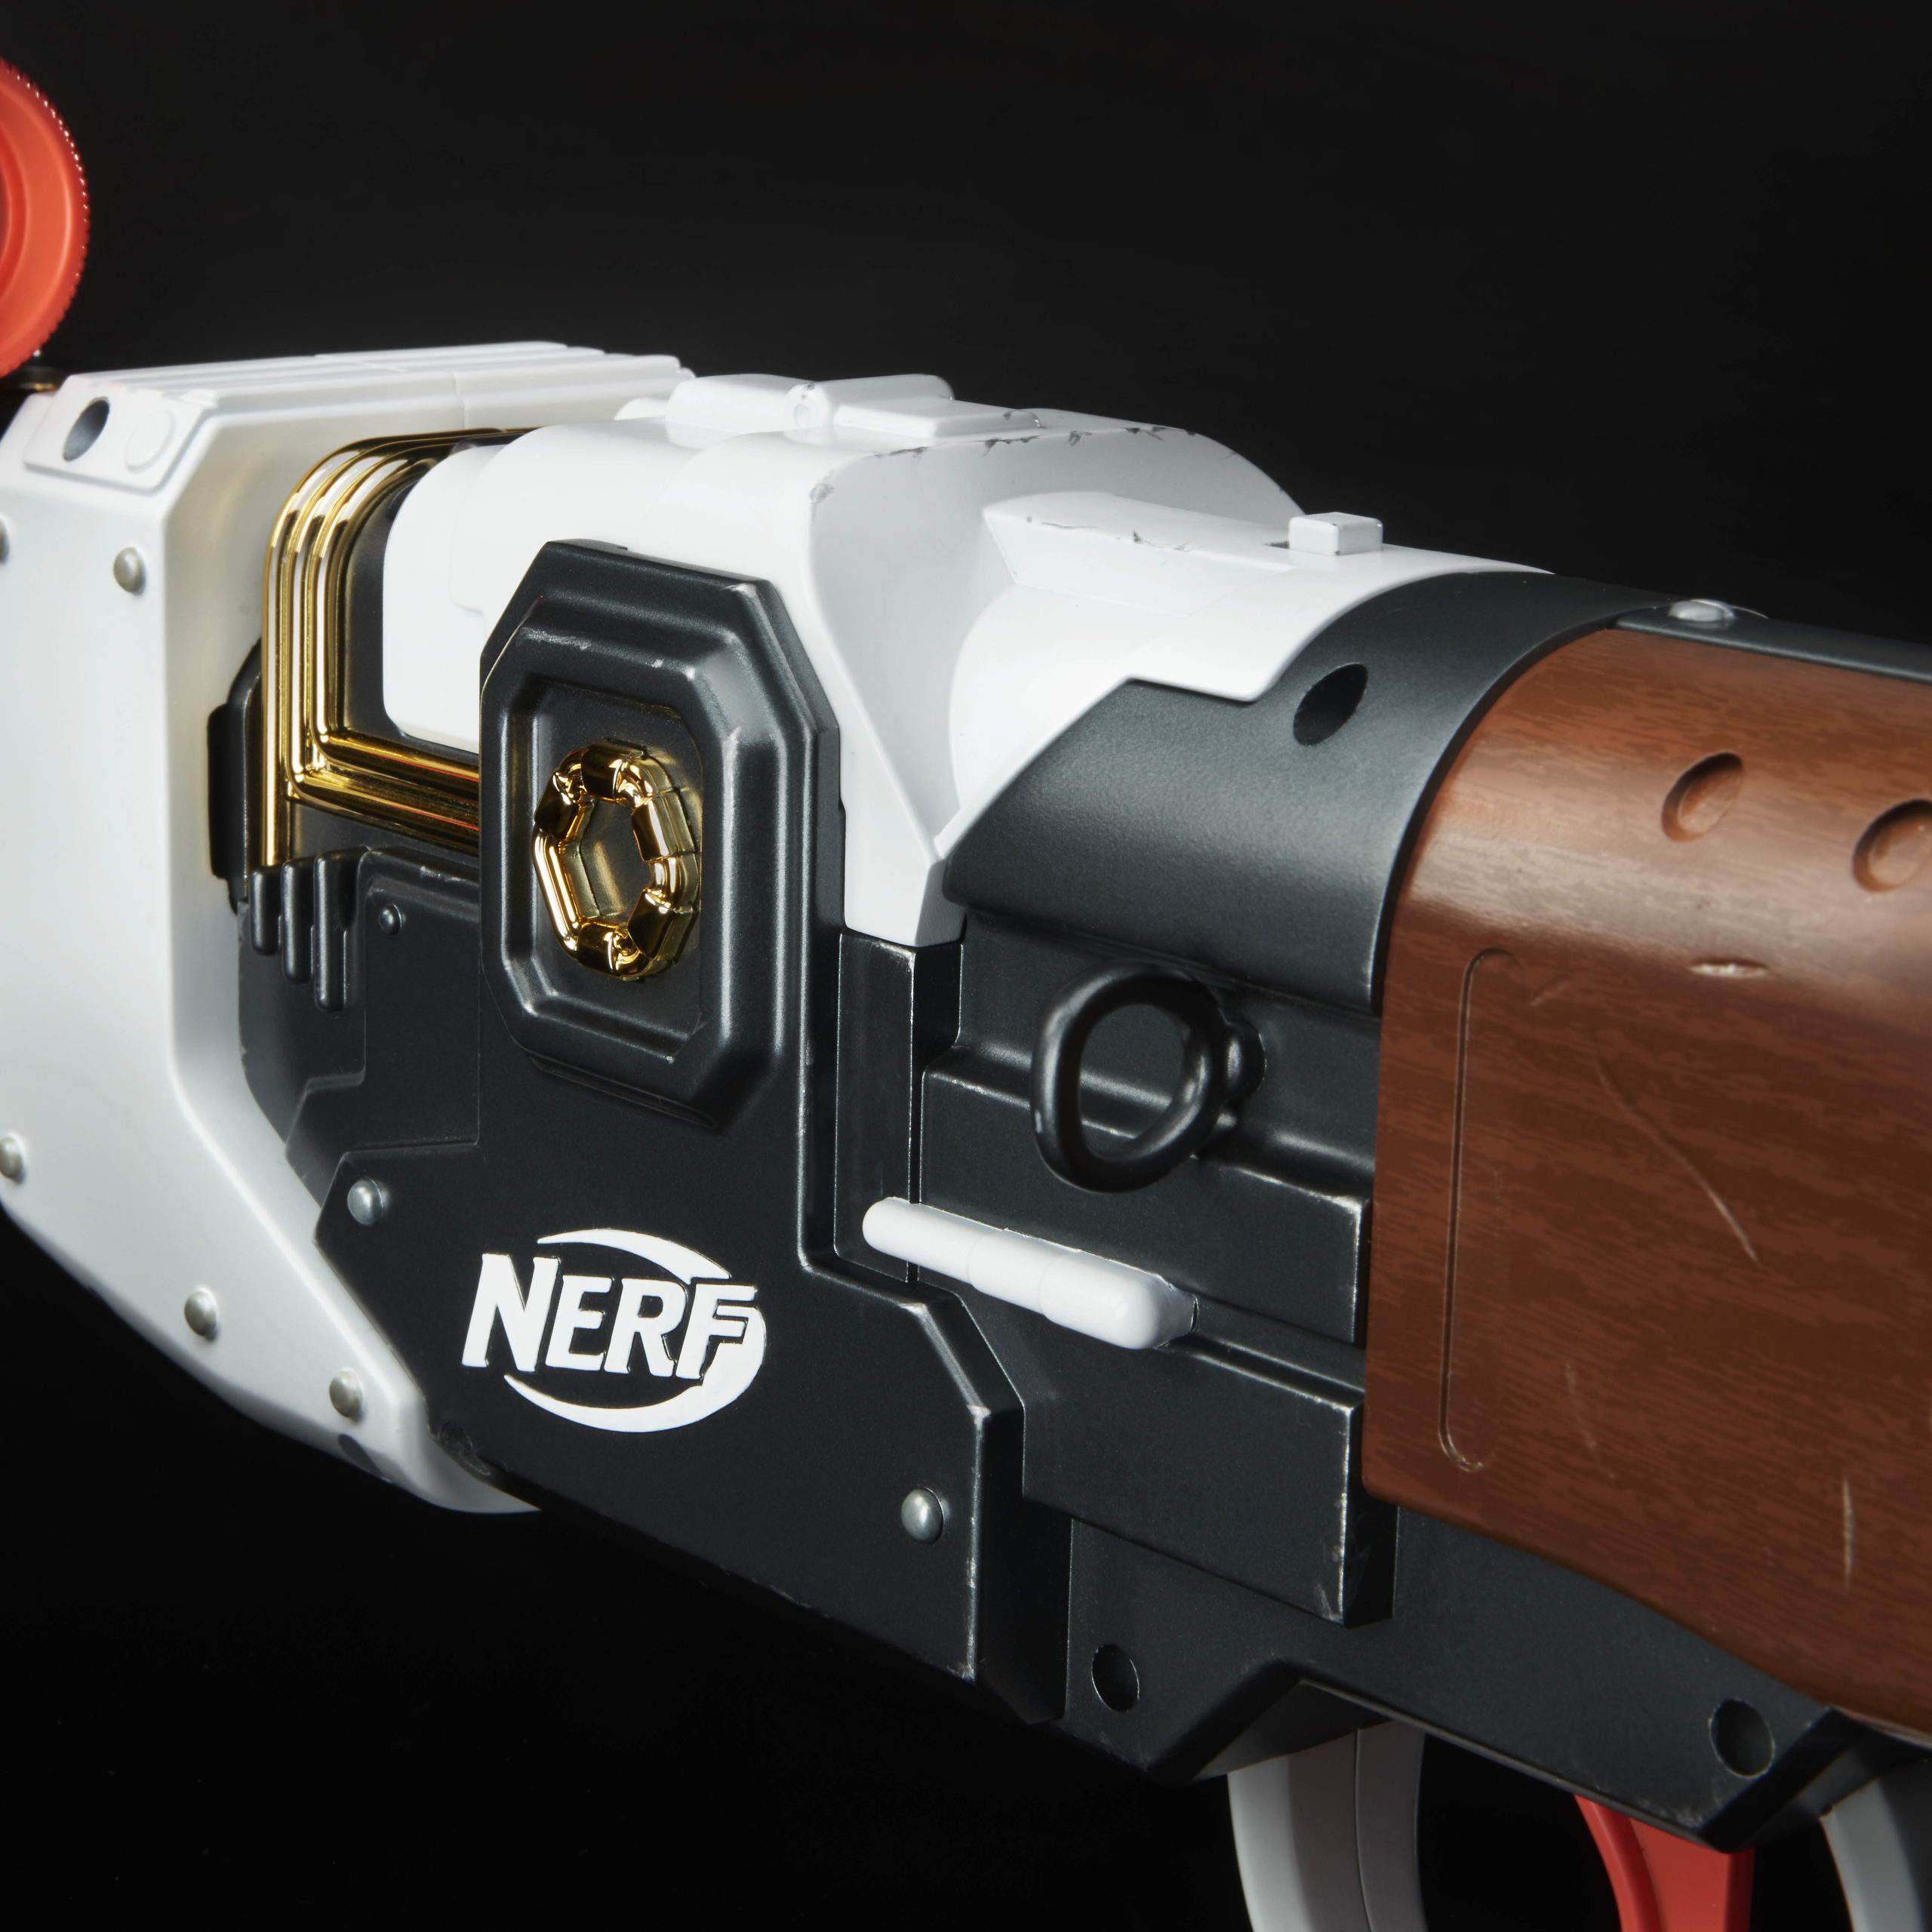 NERF Star Wars The Mandalorian Amban Phase-pulse Blaster – Hasbro